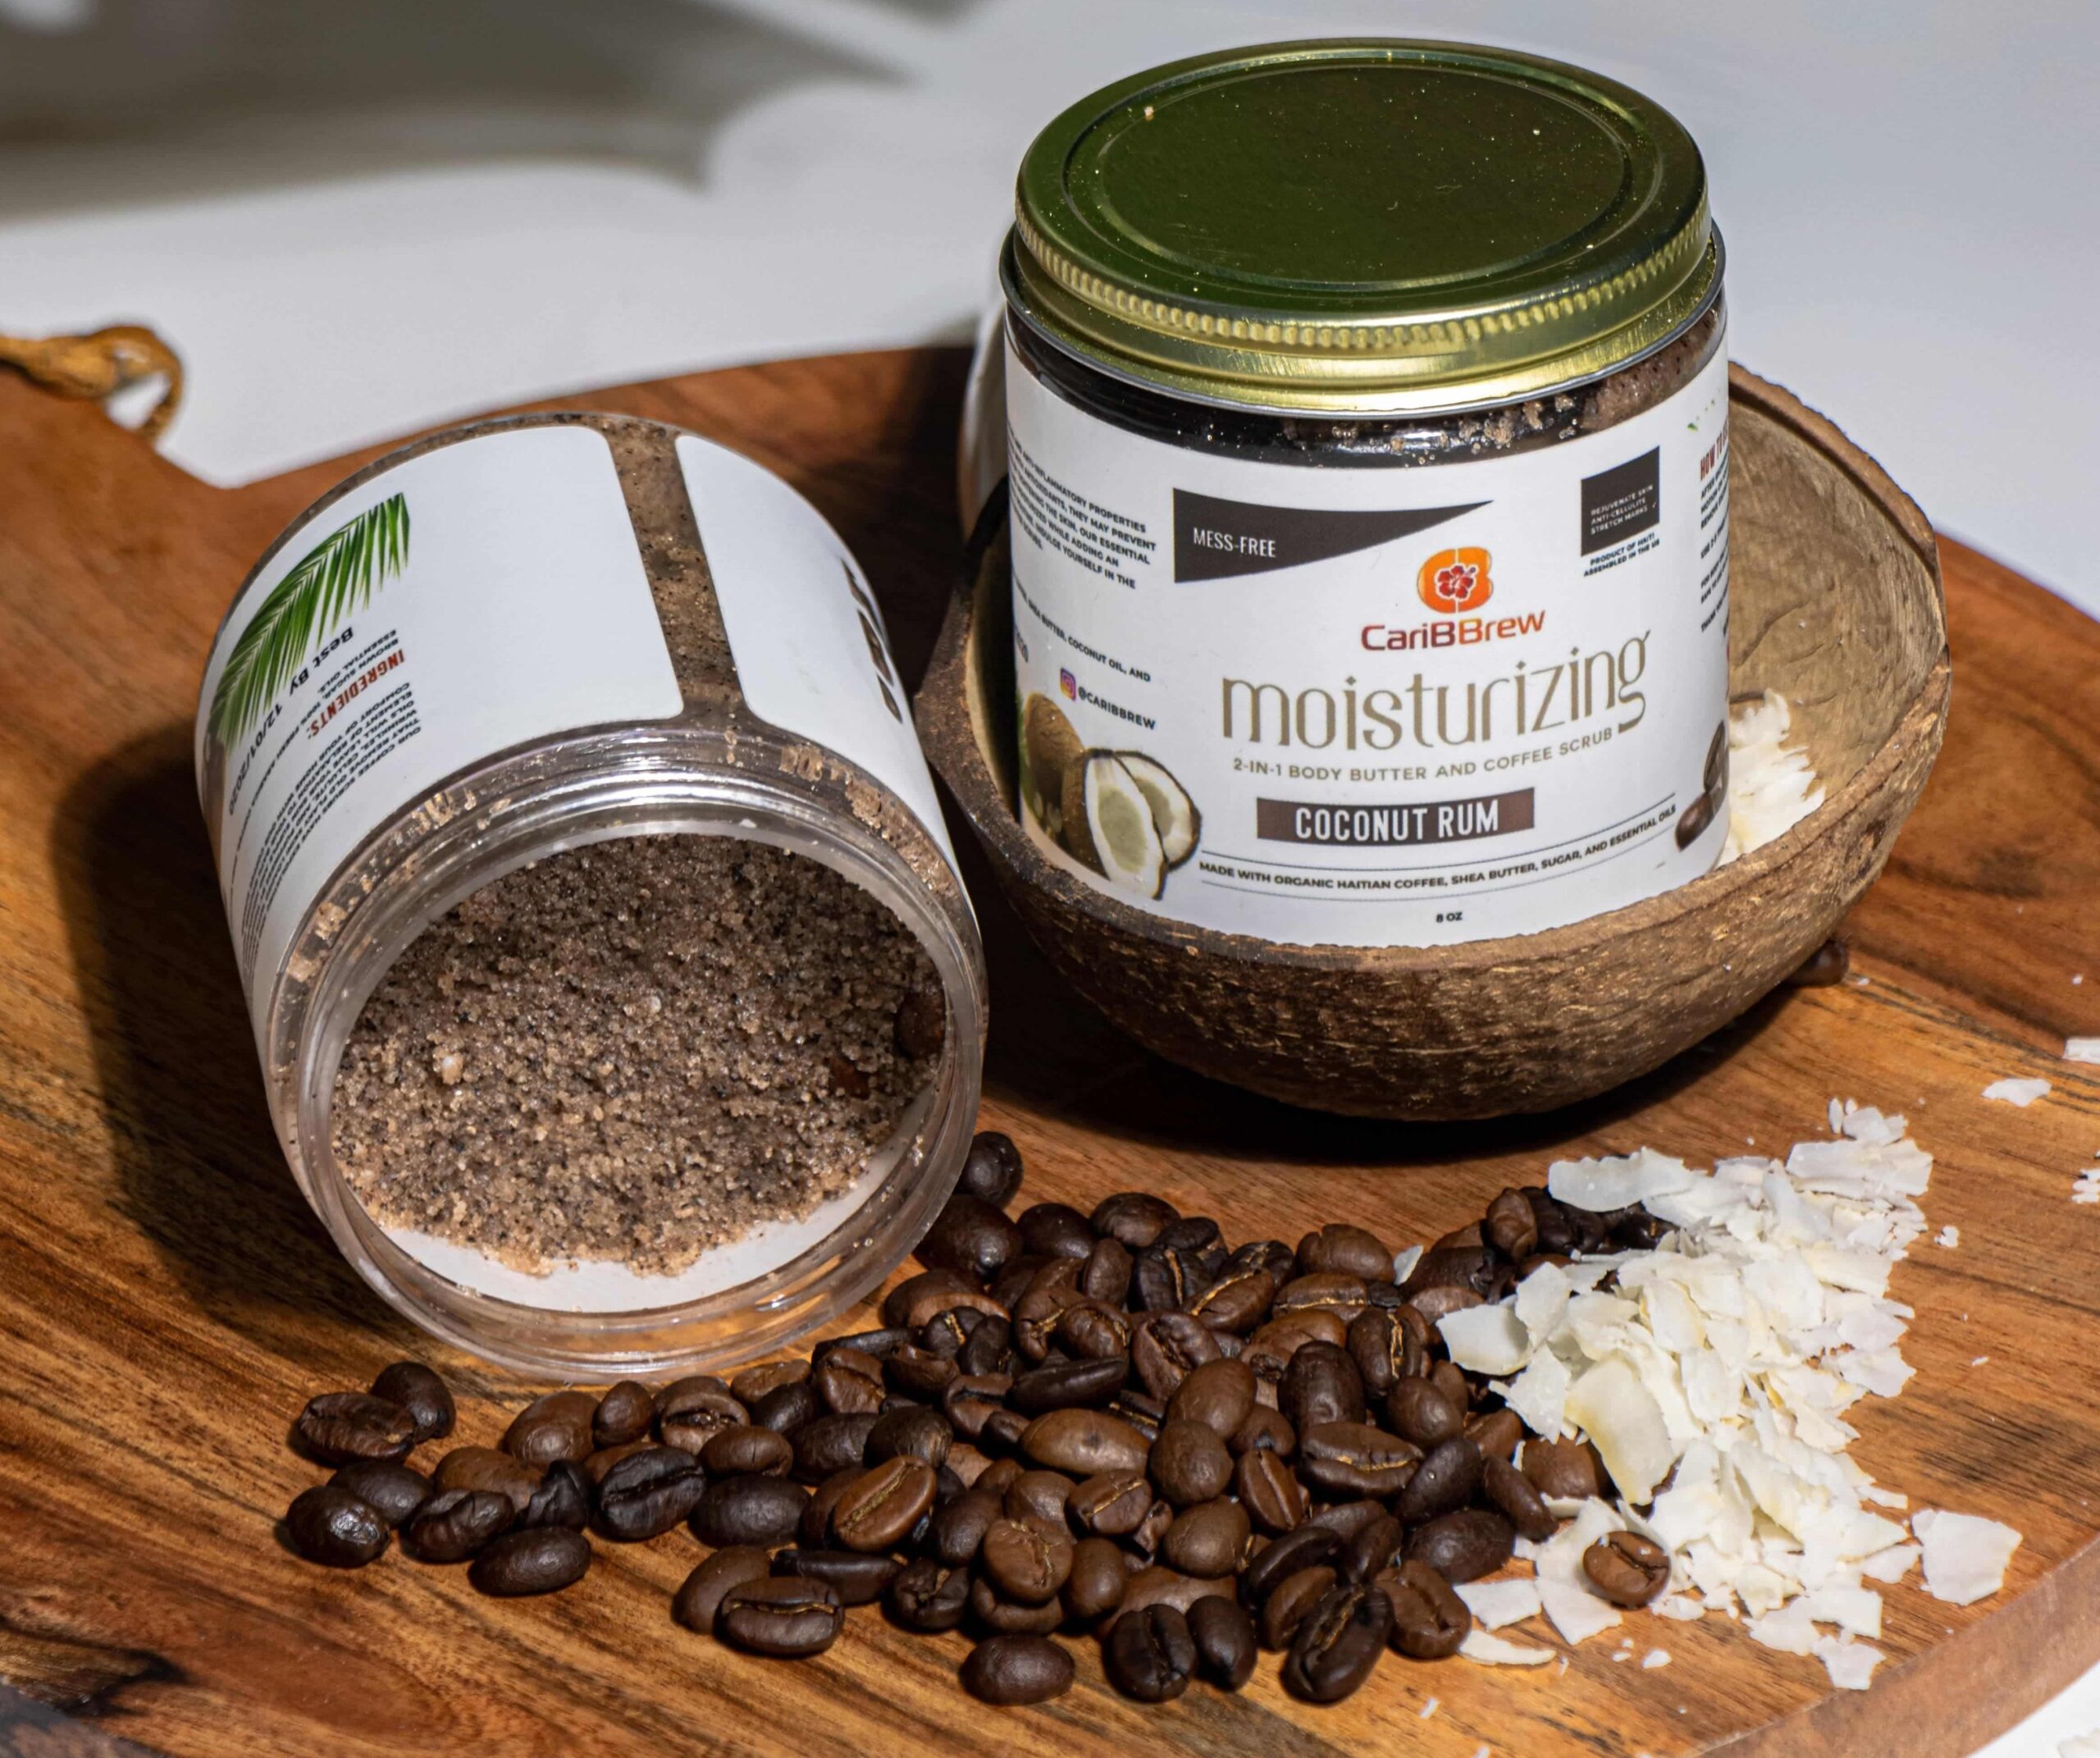 Coconut Rum - Moisturizing Haitian Coffee Scrub